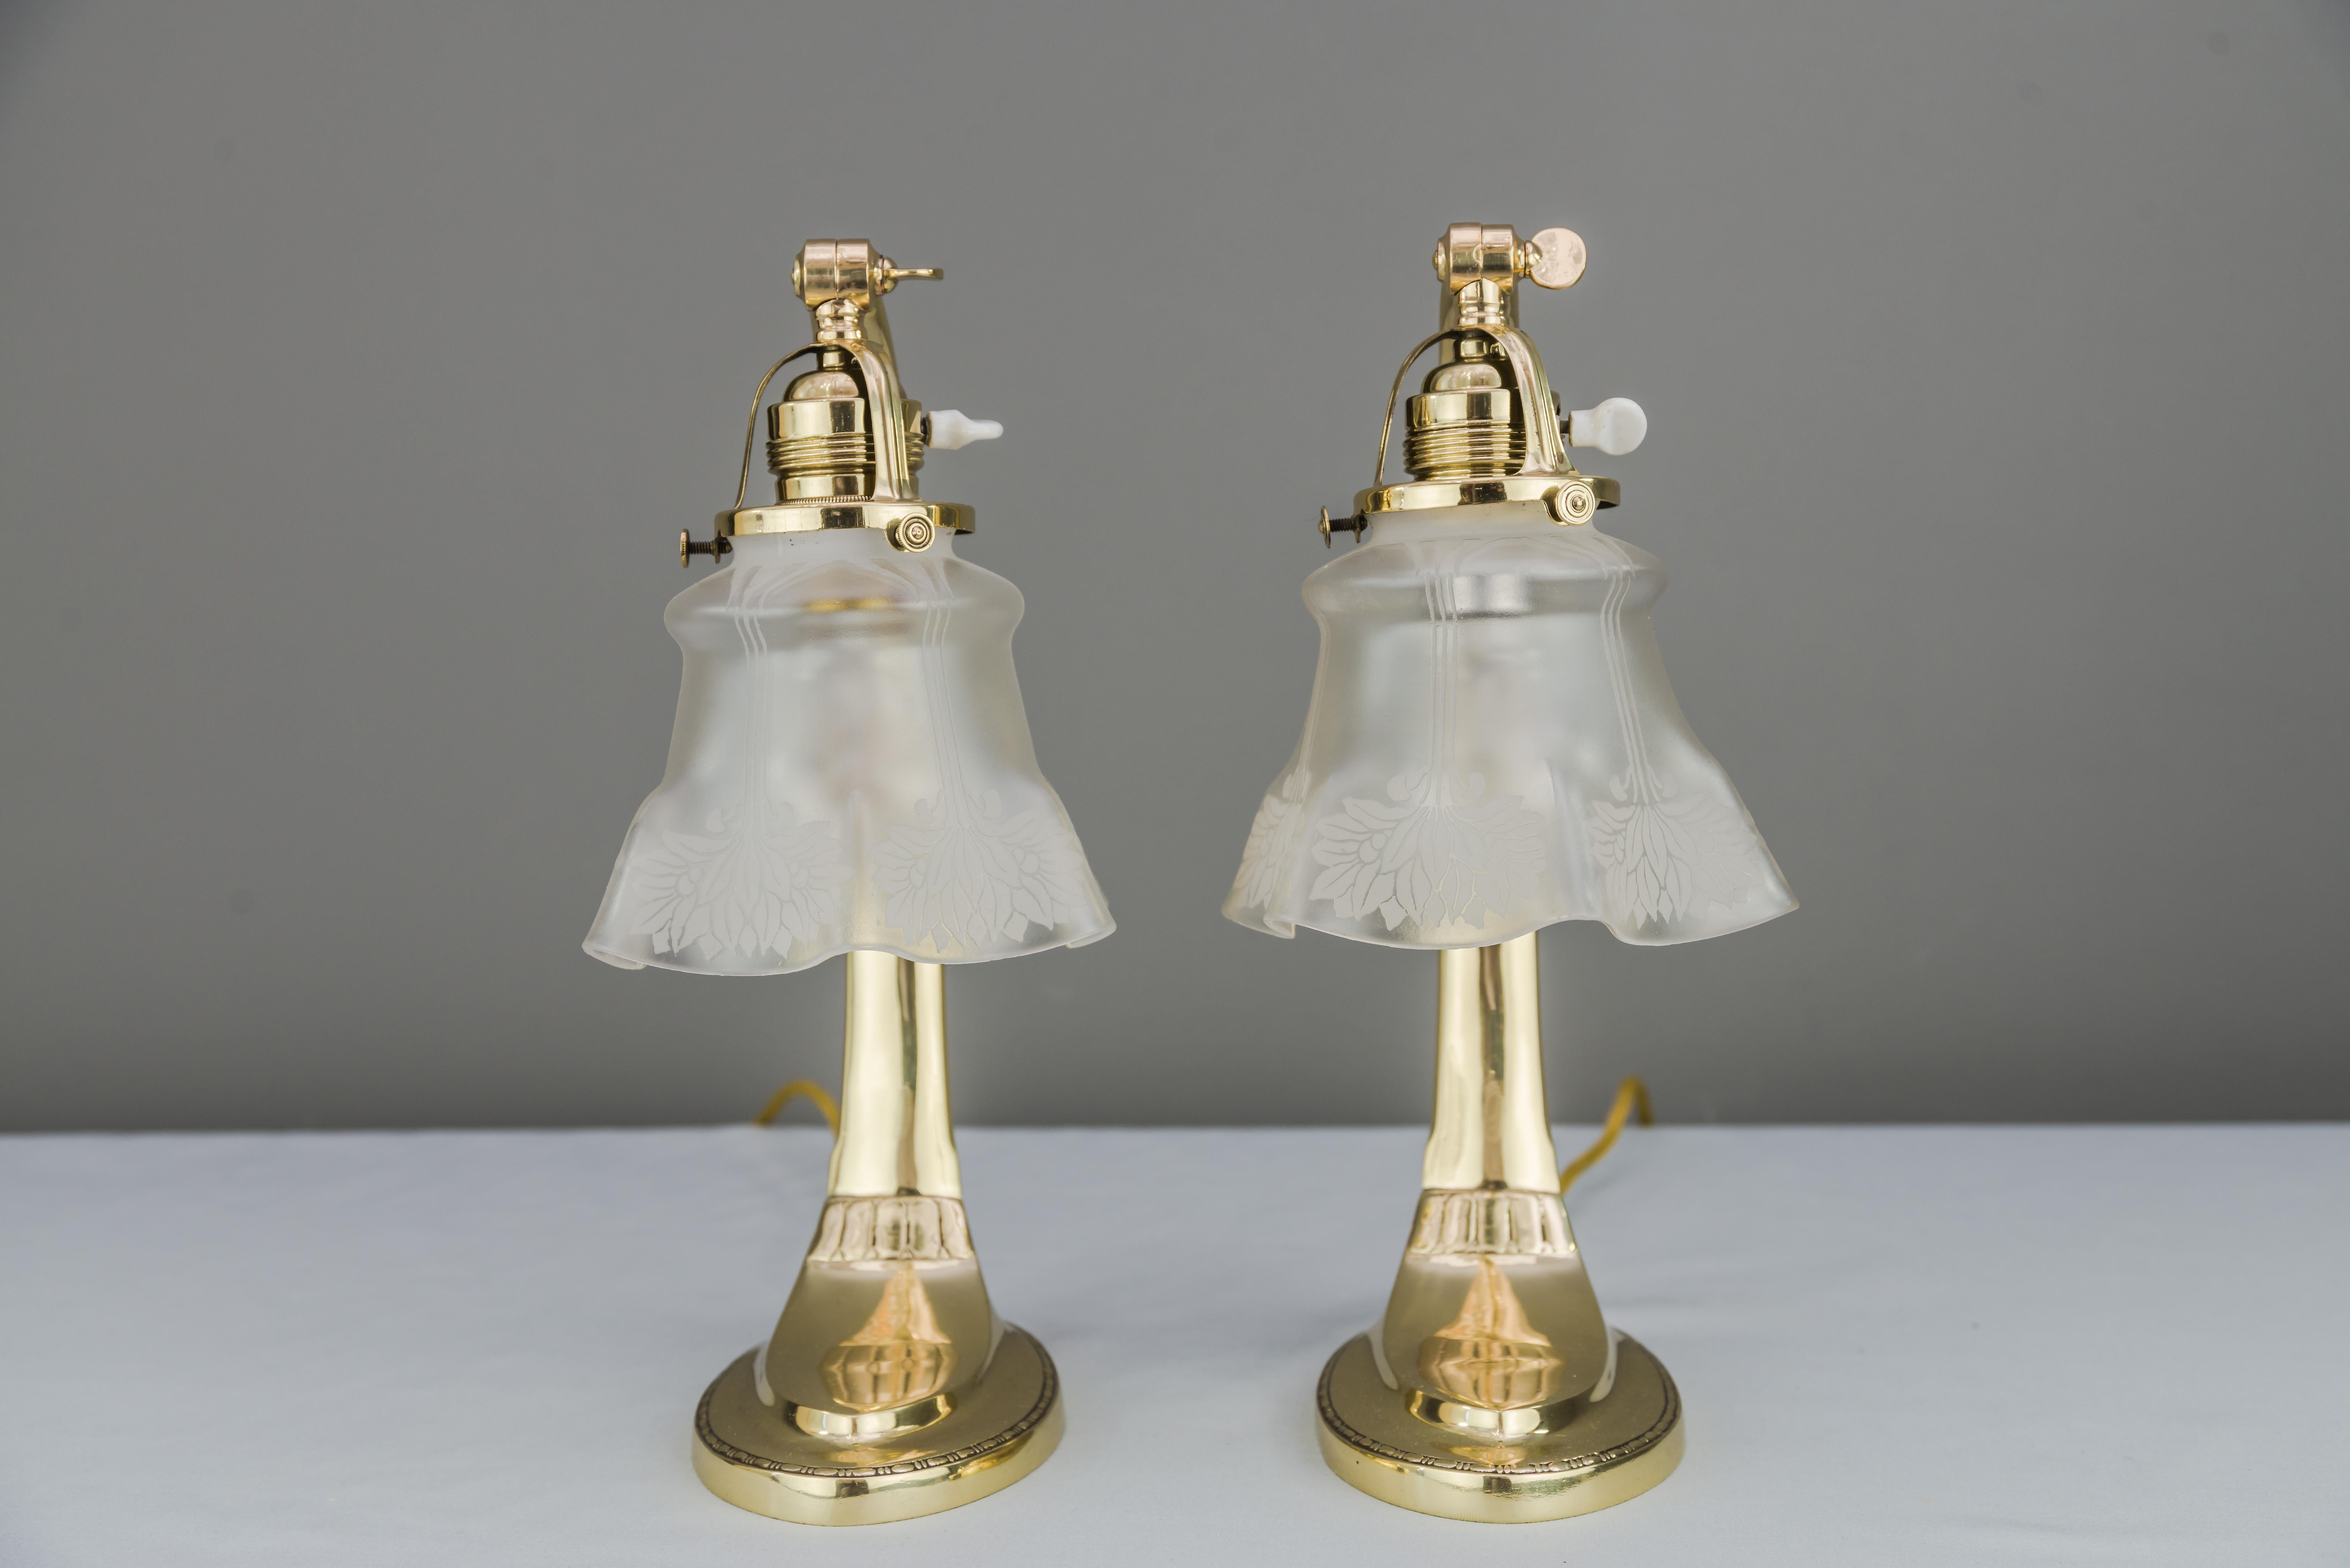 Two Jugendstil Table Lamps 1907 with Original Glas Shades For Sale 9